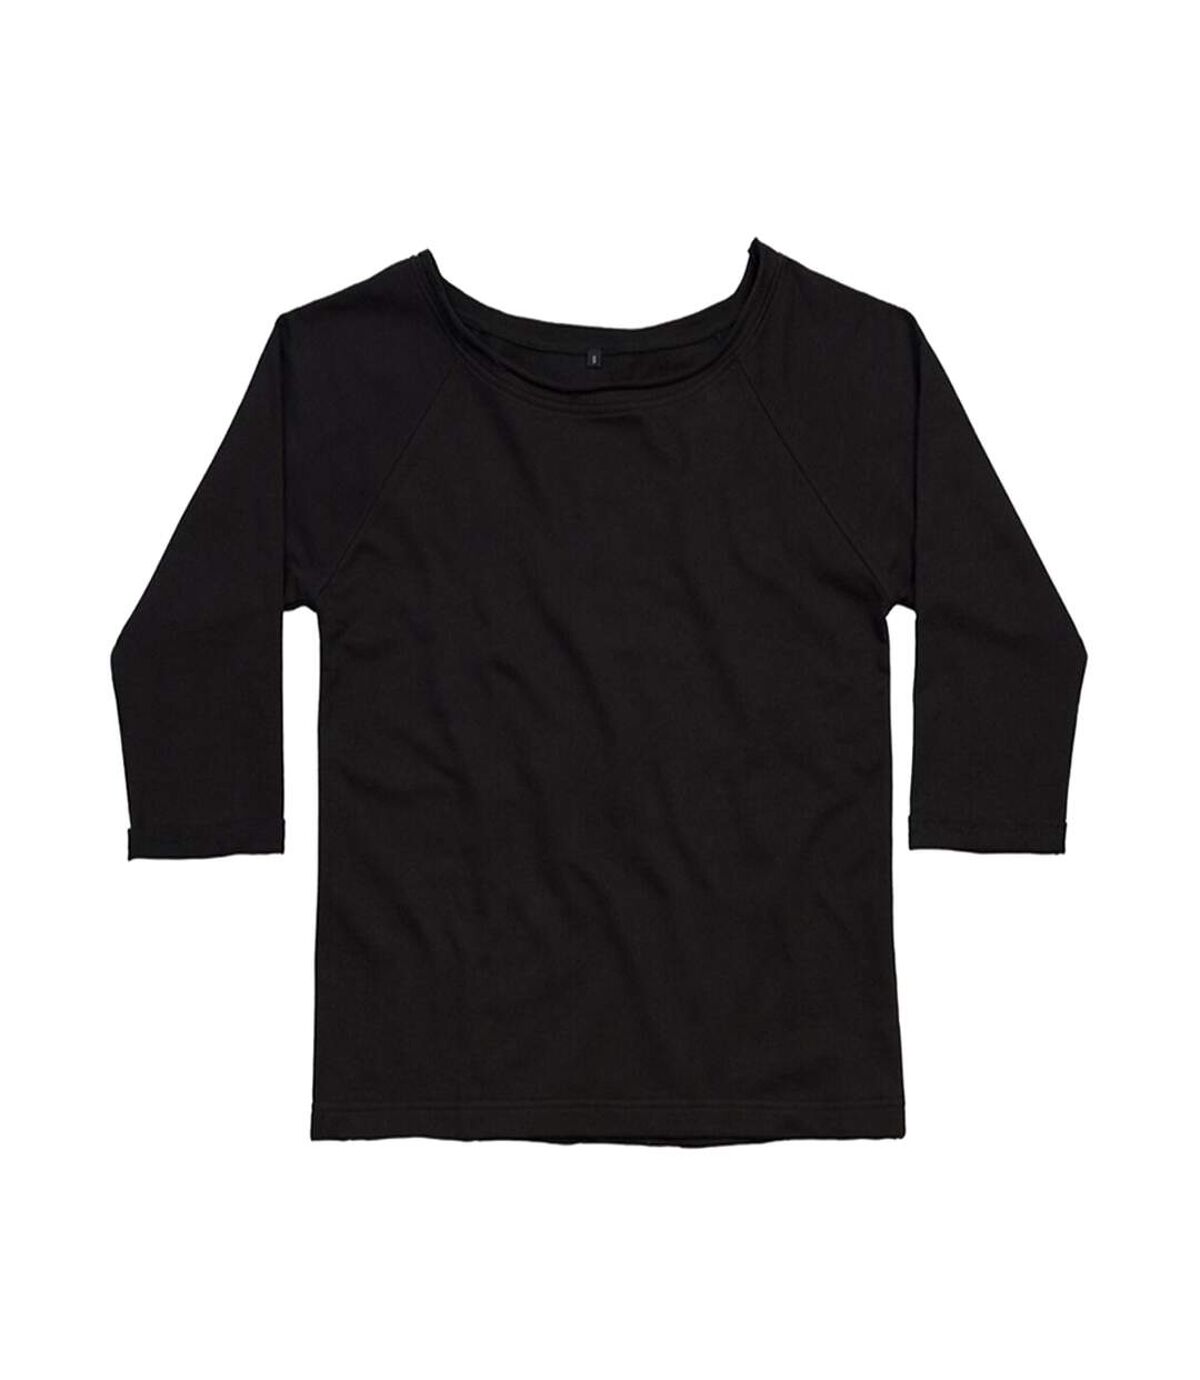 Mantis Womens/Ladies Flash Dance Sweatshirt (Black)